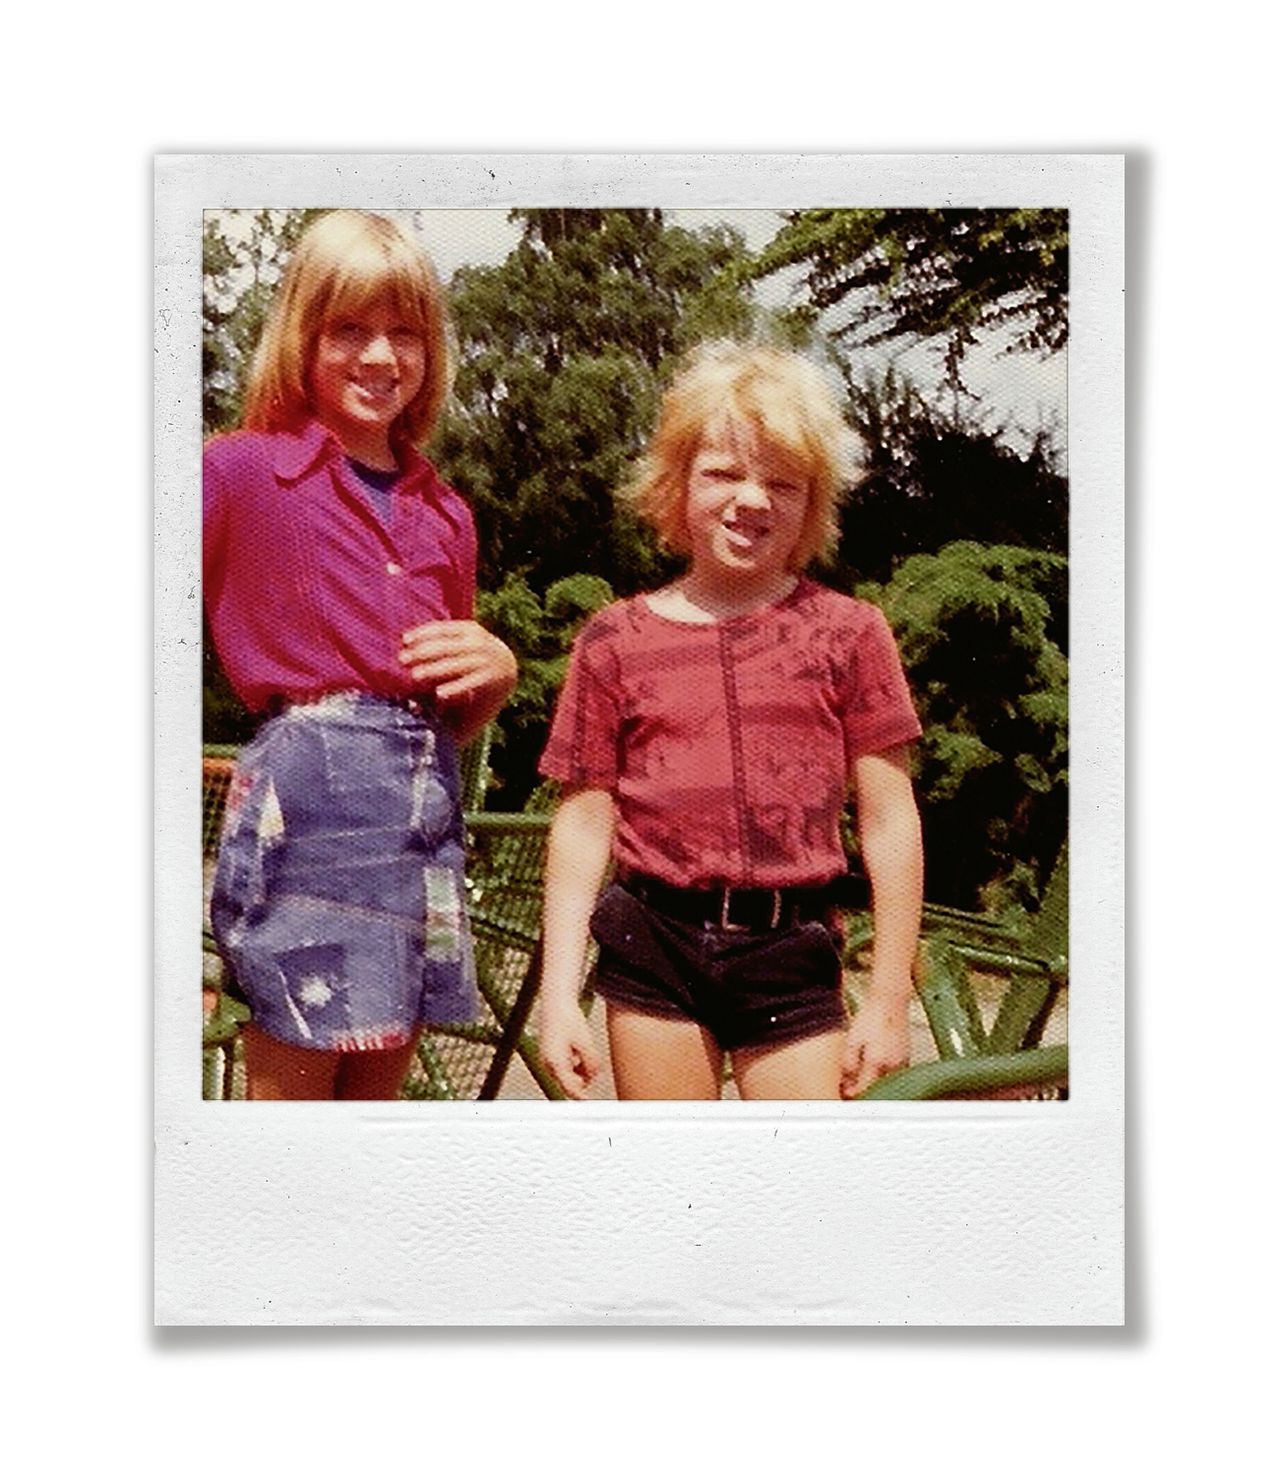 Marion en Joost in Dierenpark Rhenen, 1975